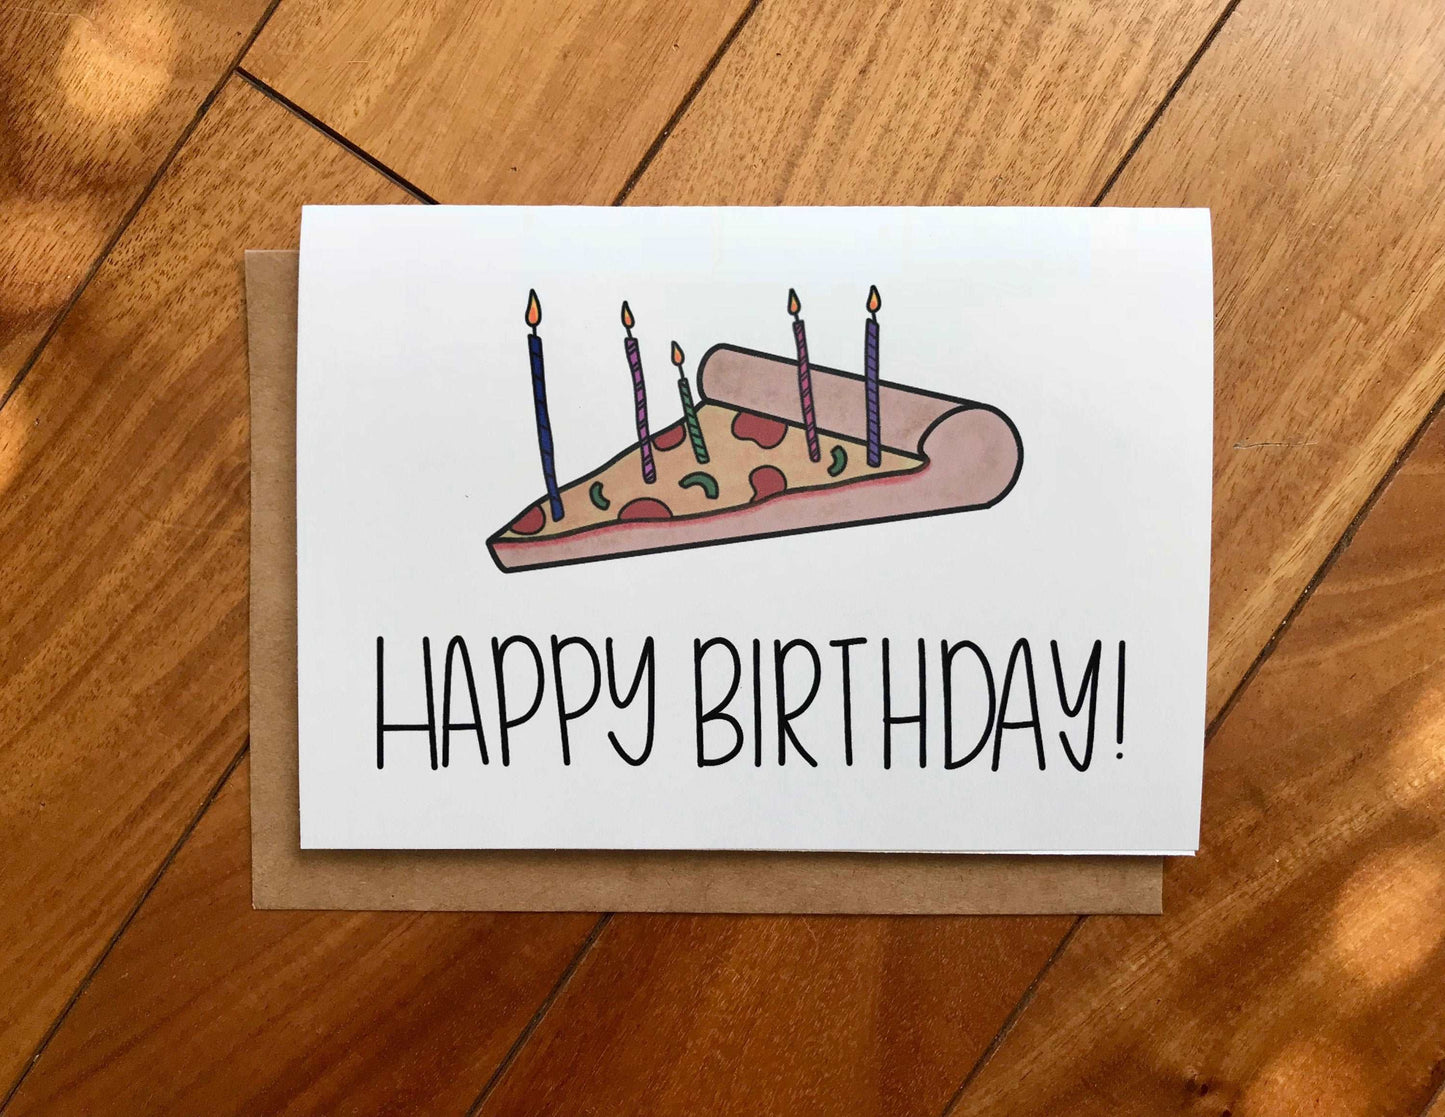 Fun Pizza Birthday Card by StoneDonut Design